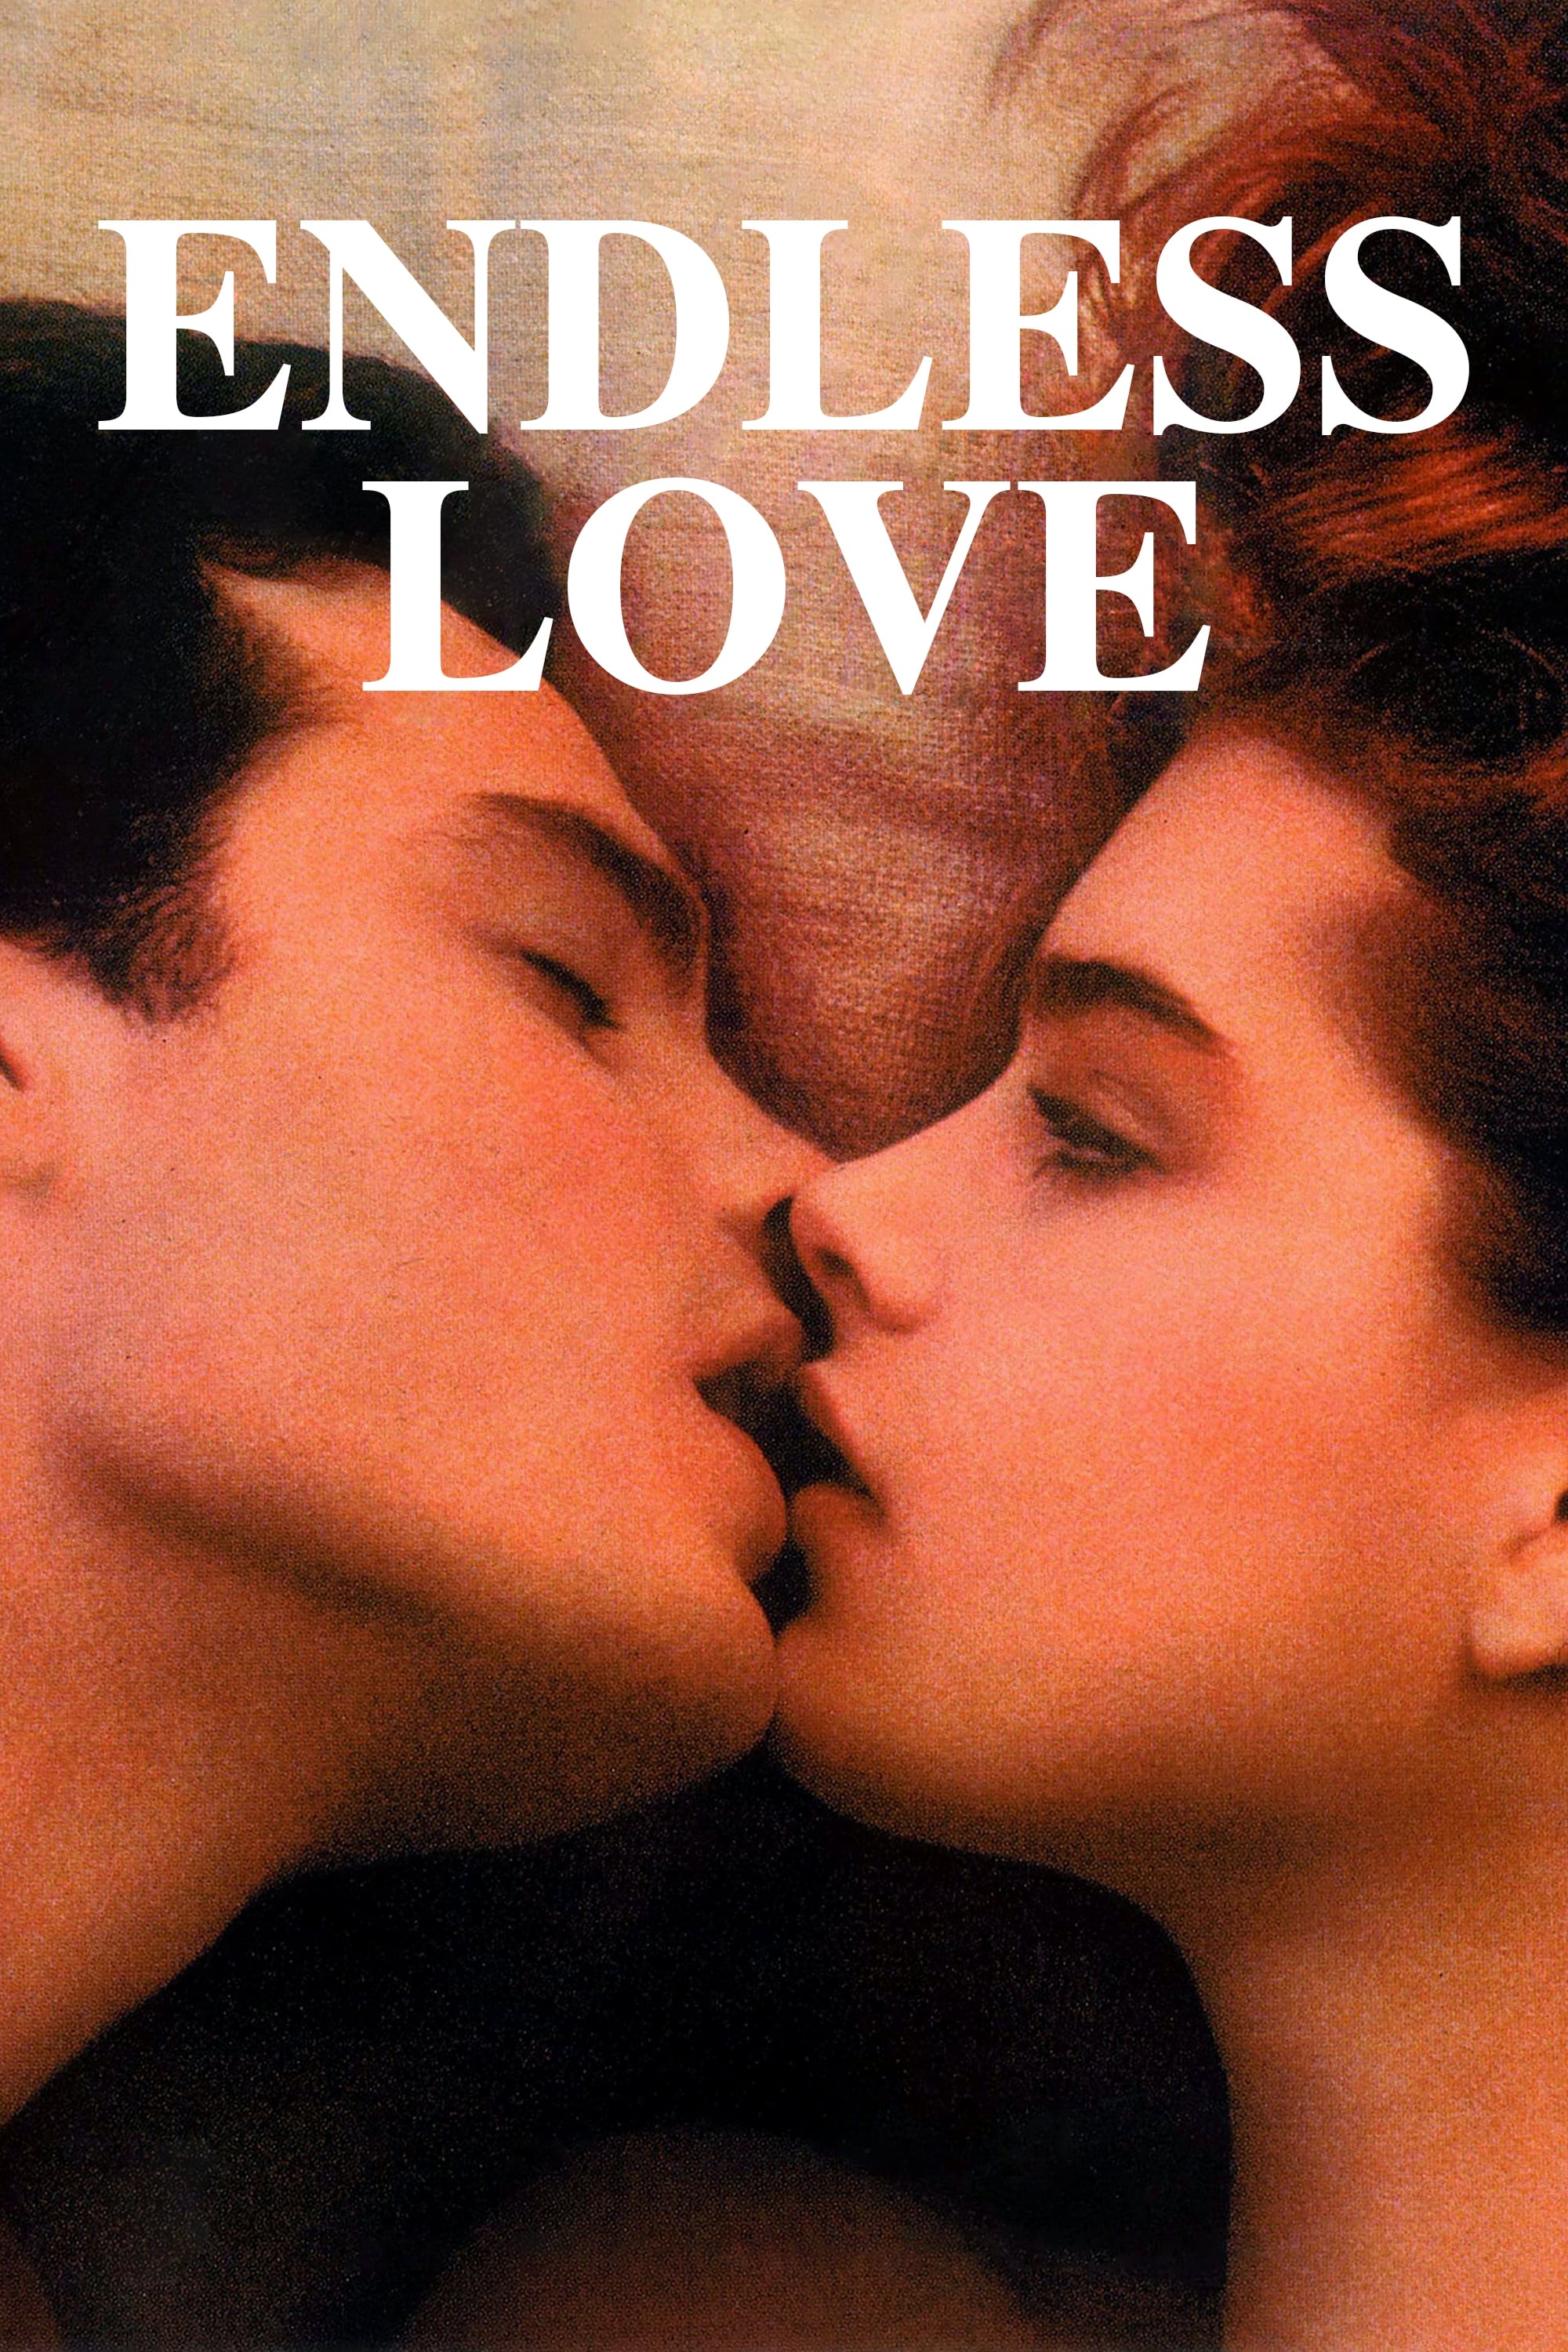 Endlose Liebe (1981)